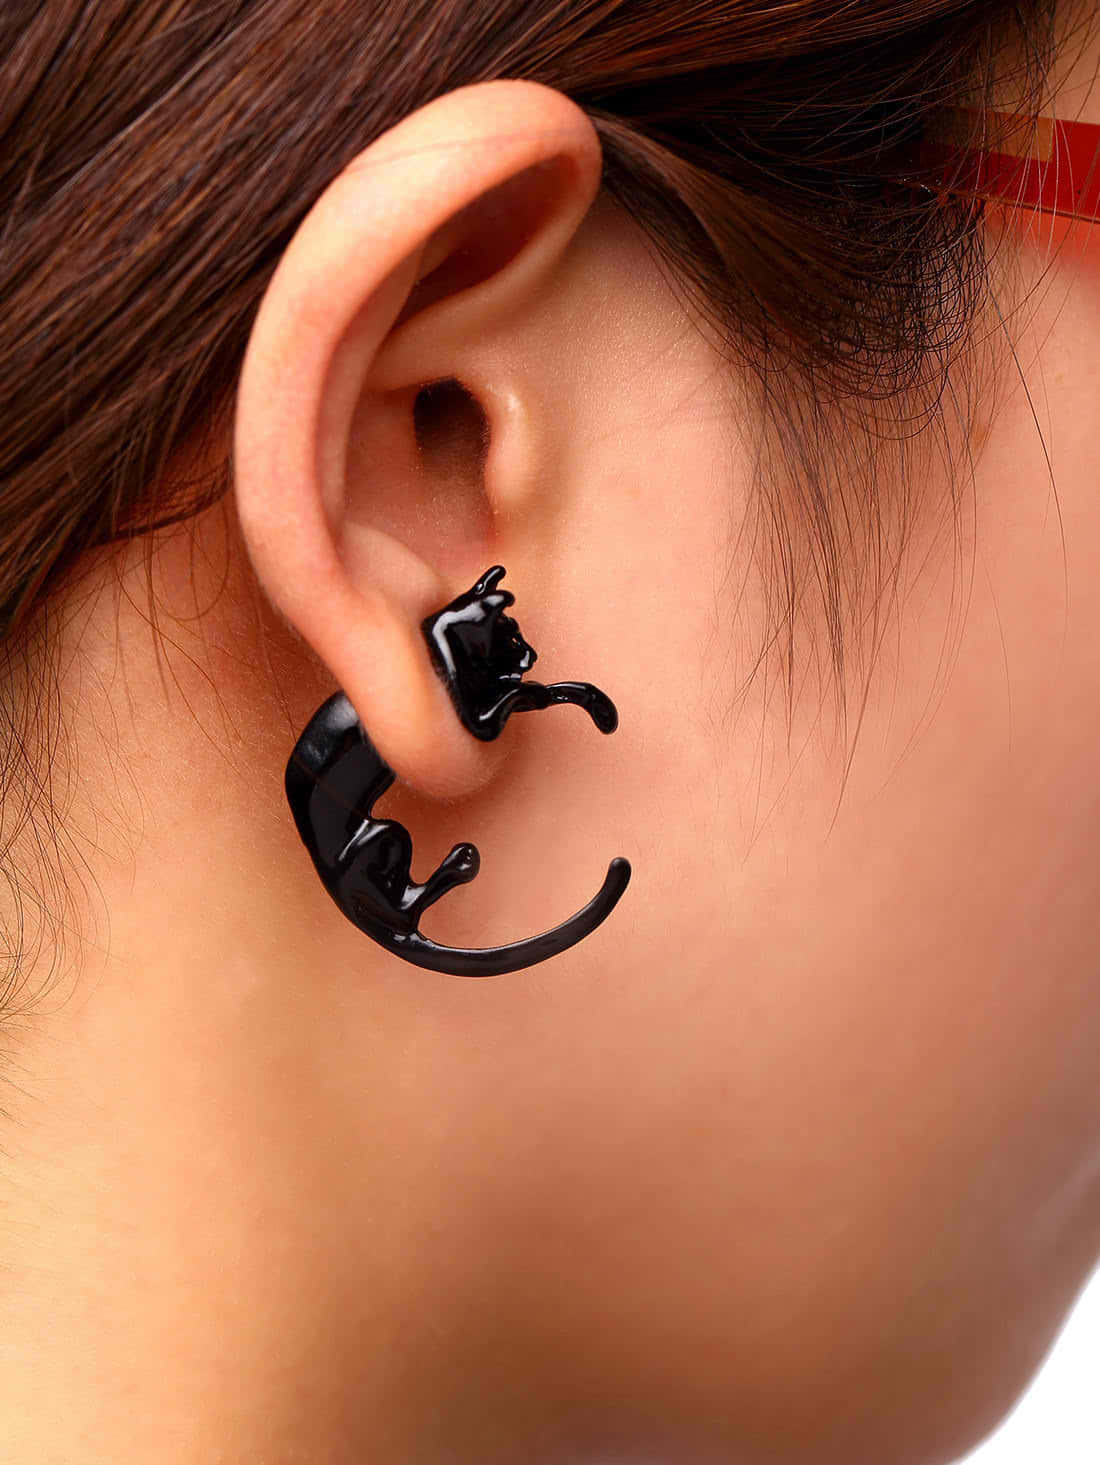 A Woman Wearing A Black Cat Ear Cuff